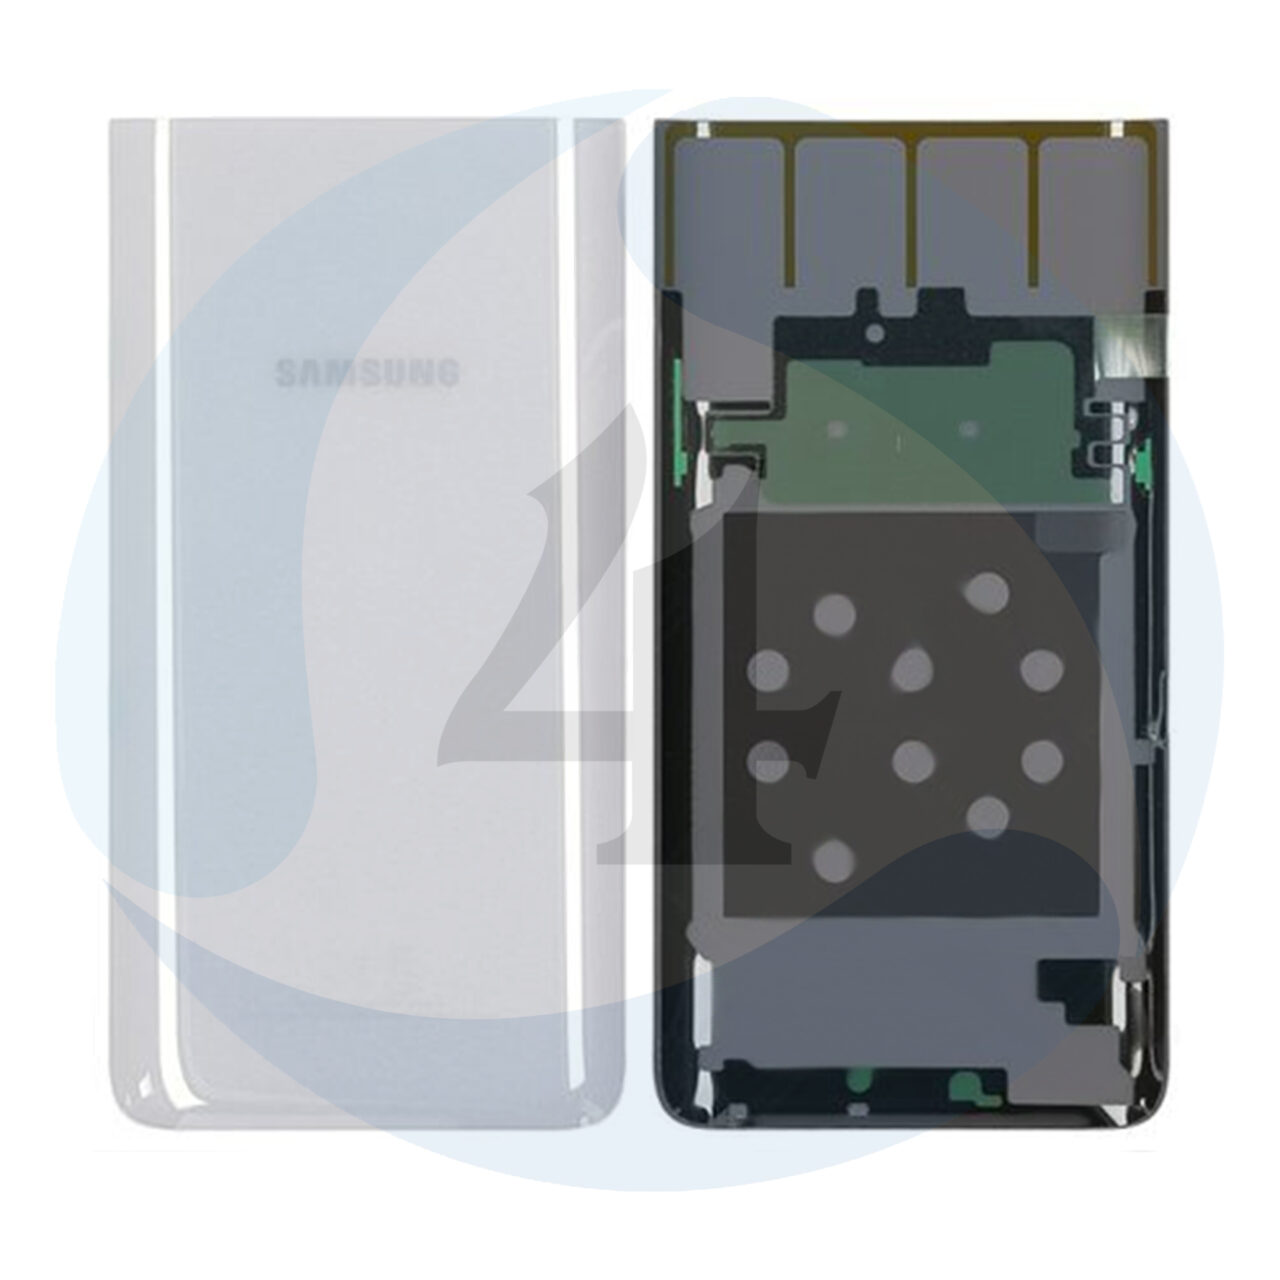 Samsung Galaxy A80 A805 F backcover white